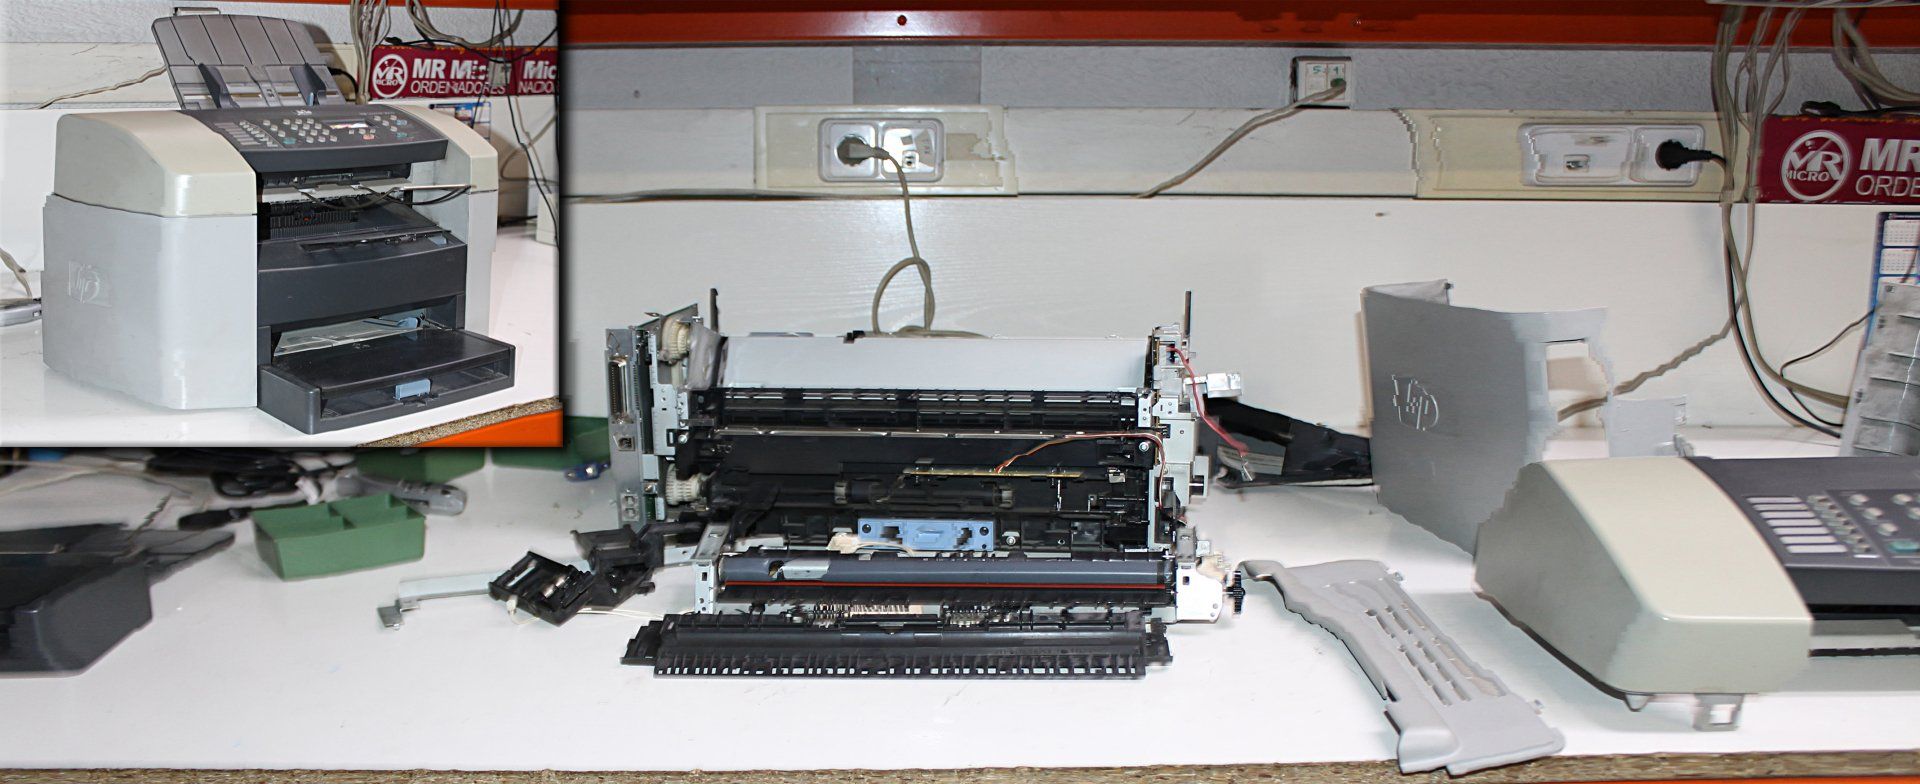 Reparacion Fax Impresora hp Madrid Simancas